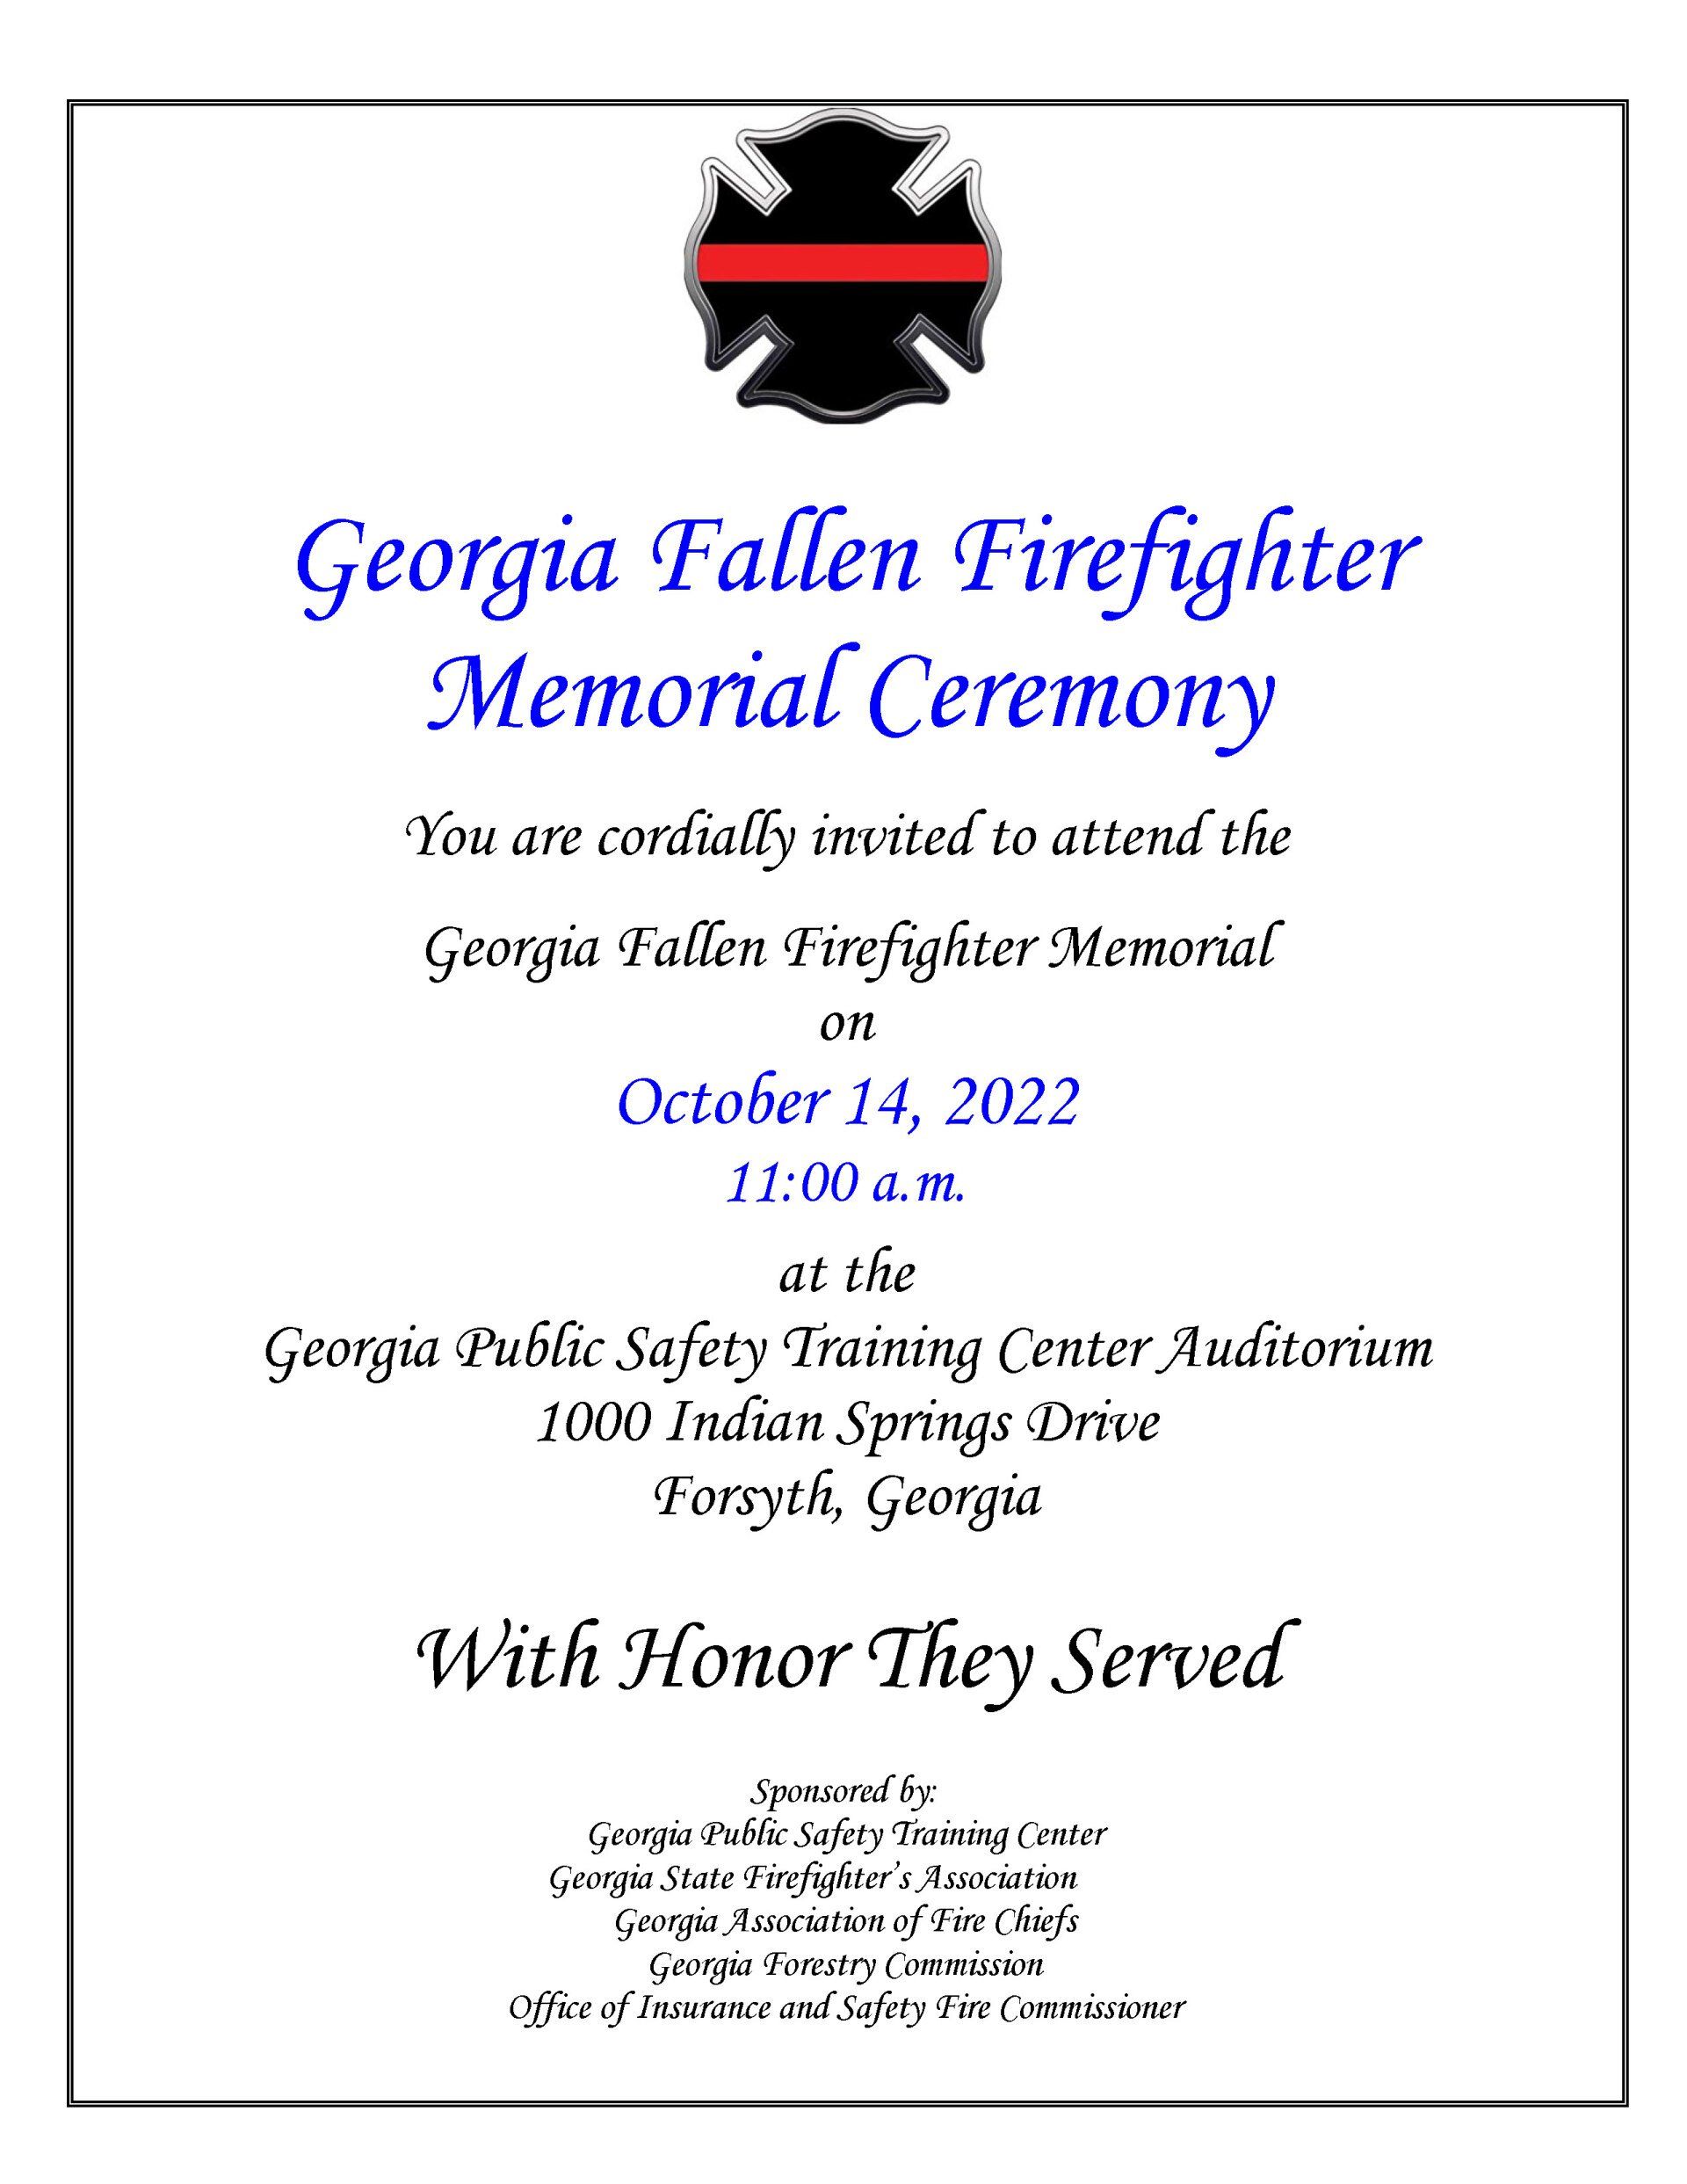 Georgia Fallen Firefighter Memorial Ceremony